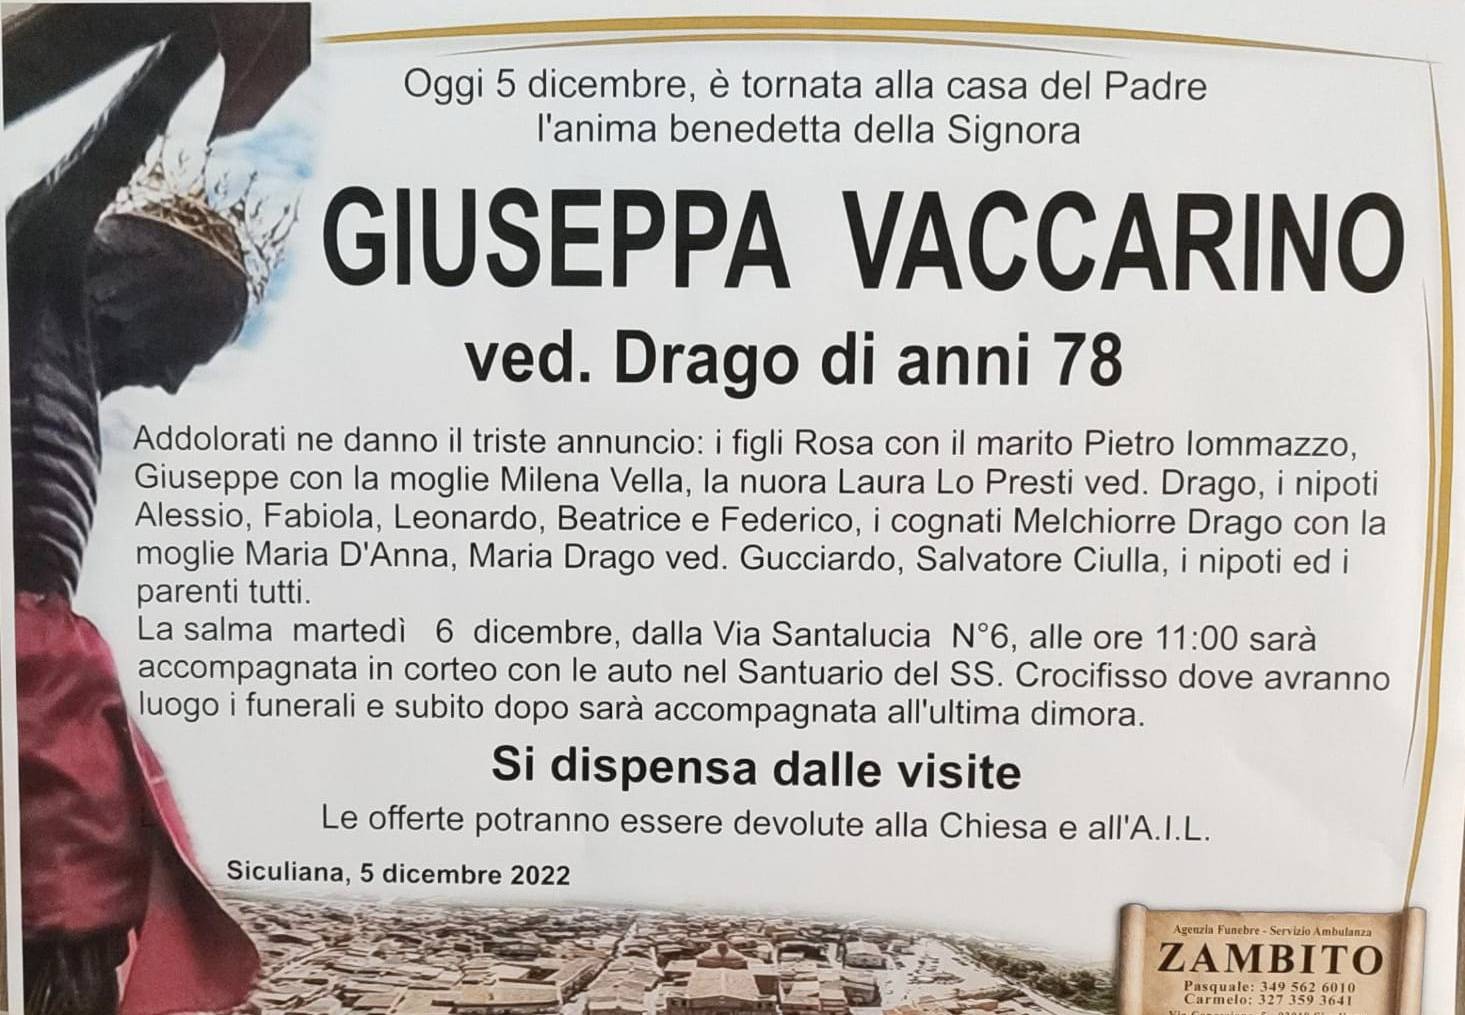 Giuseppa Vaccarino